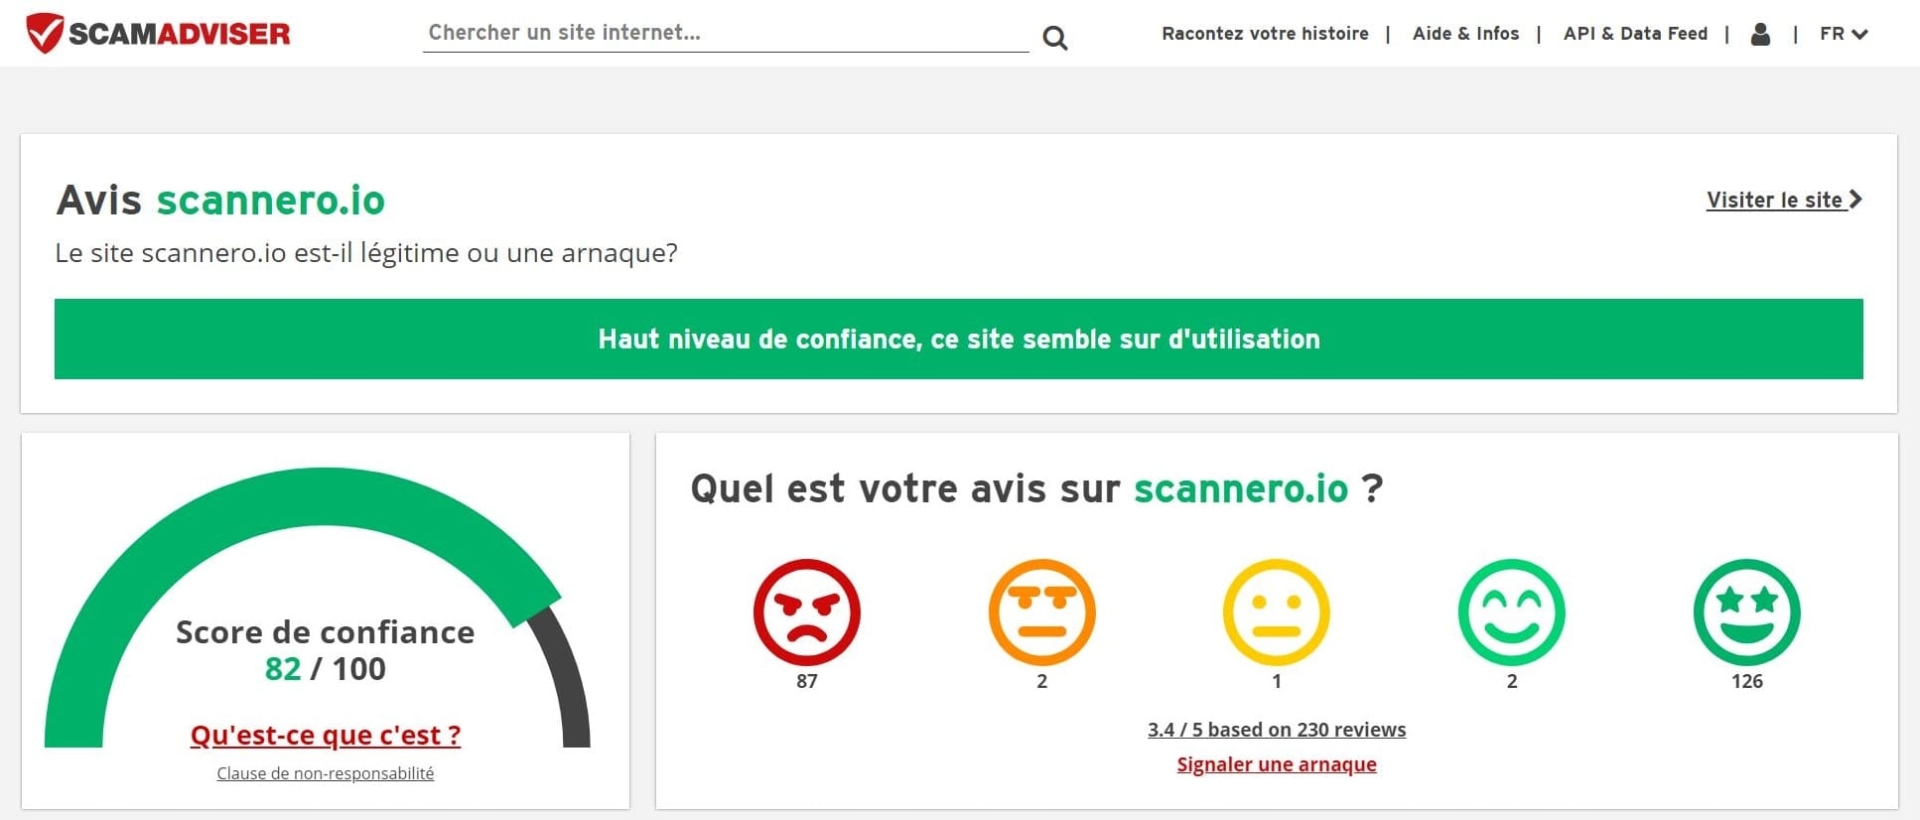 scamadviser site web trustscore pour scannero